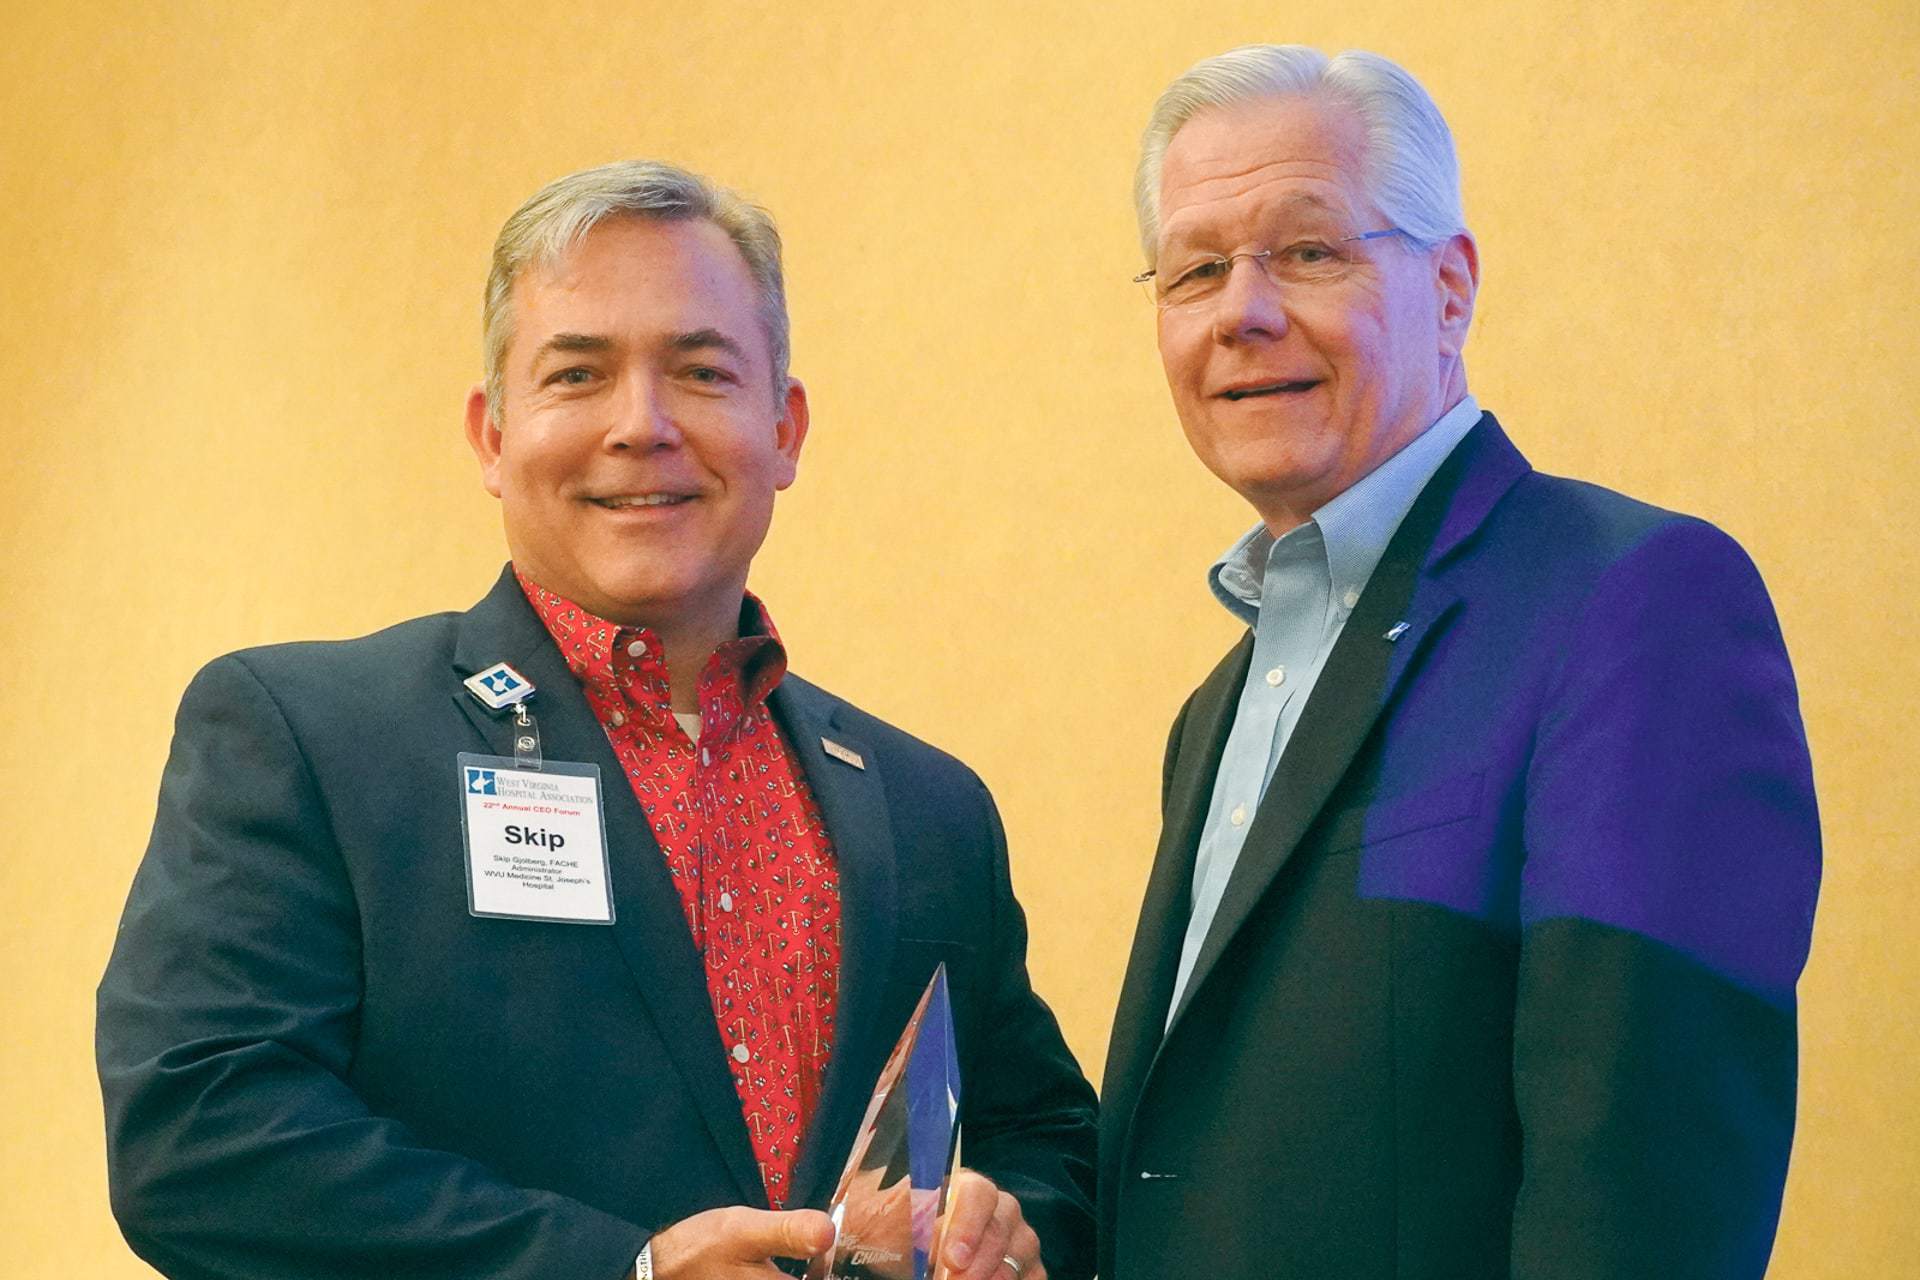 Skip Gjolberg Receives Grassroots Award from WVHA